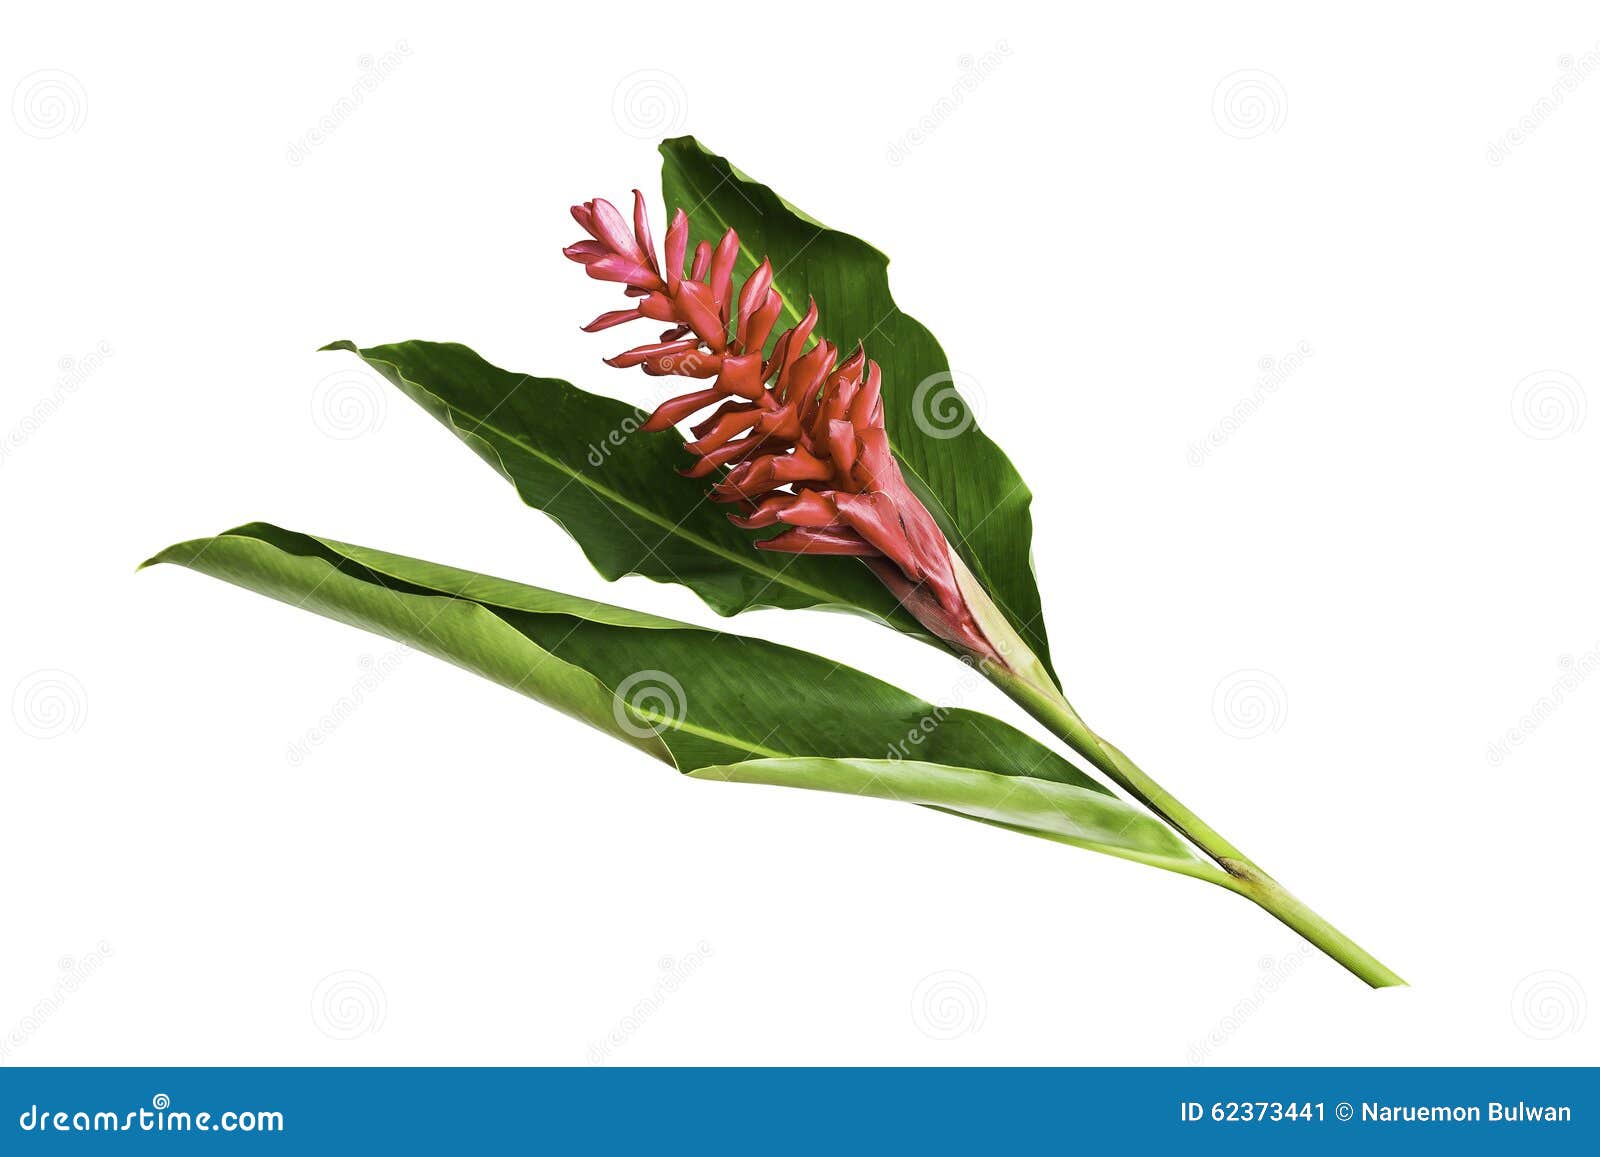 Galanga Flower with Leaf Isolated Stock Image - Image of plant, leaf: